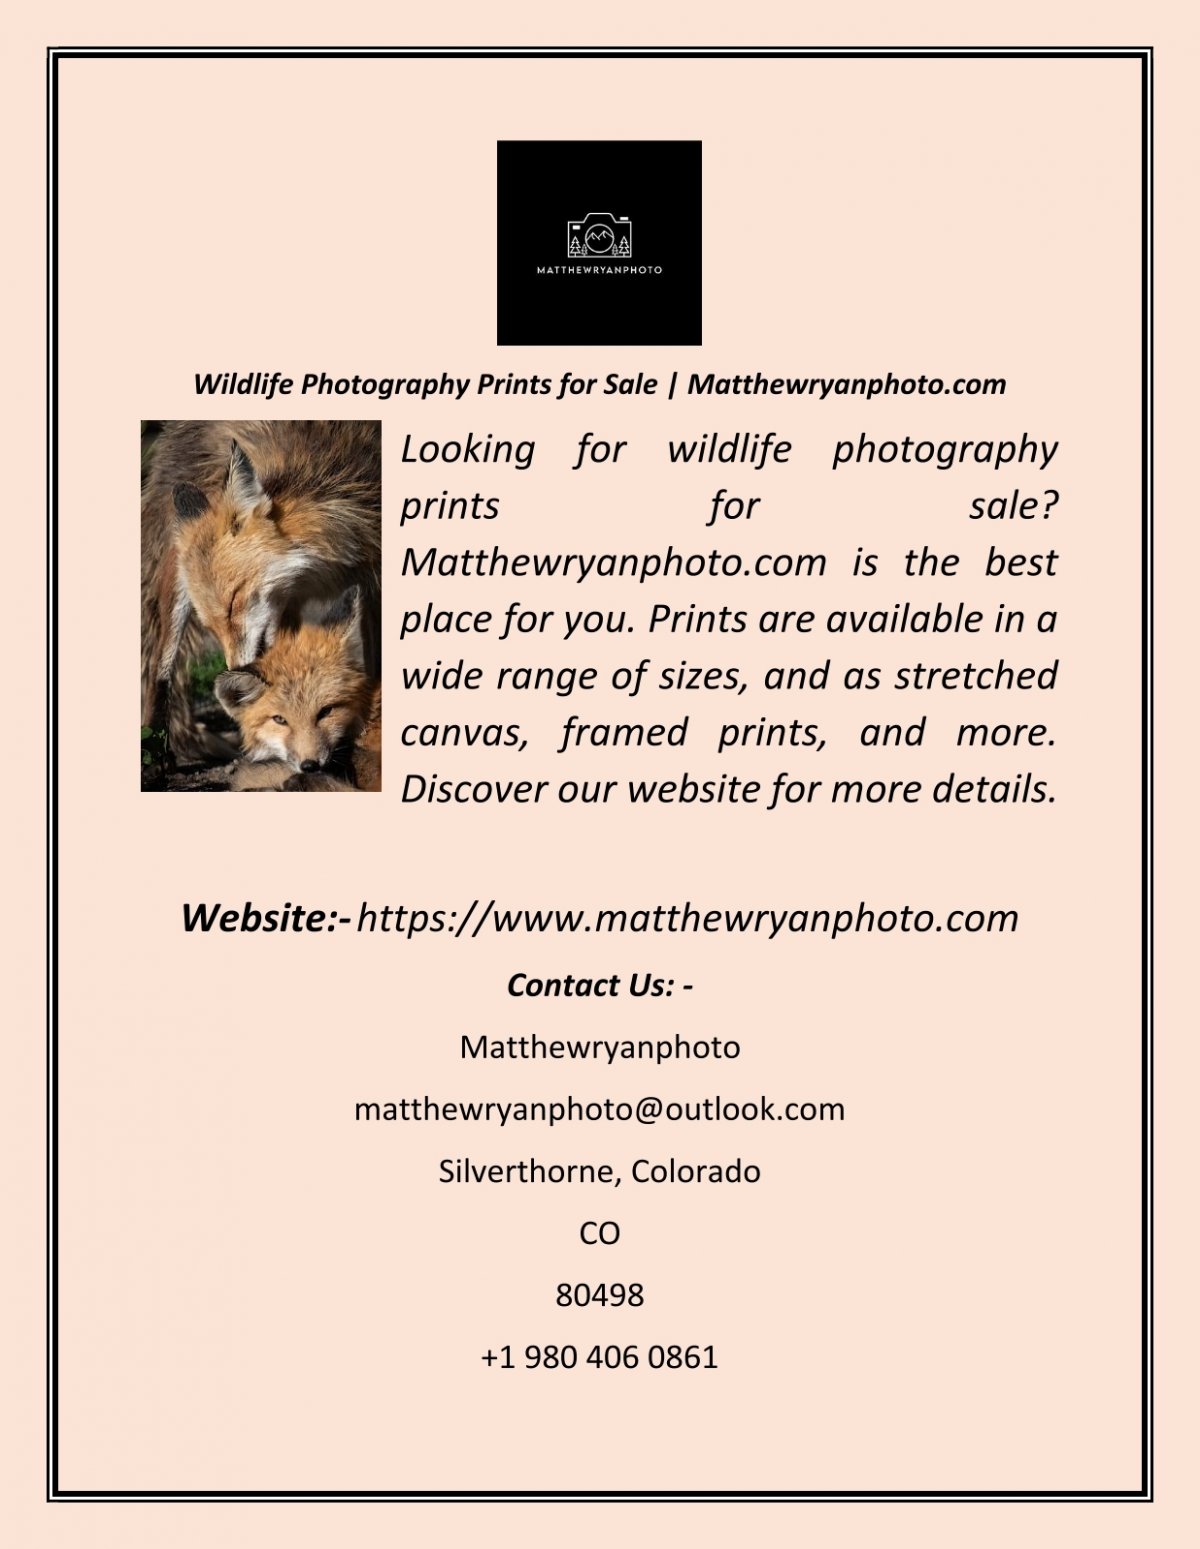 Wildlife Photography Prints for Sale Matthewryanphoto